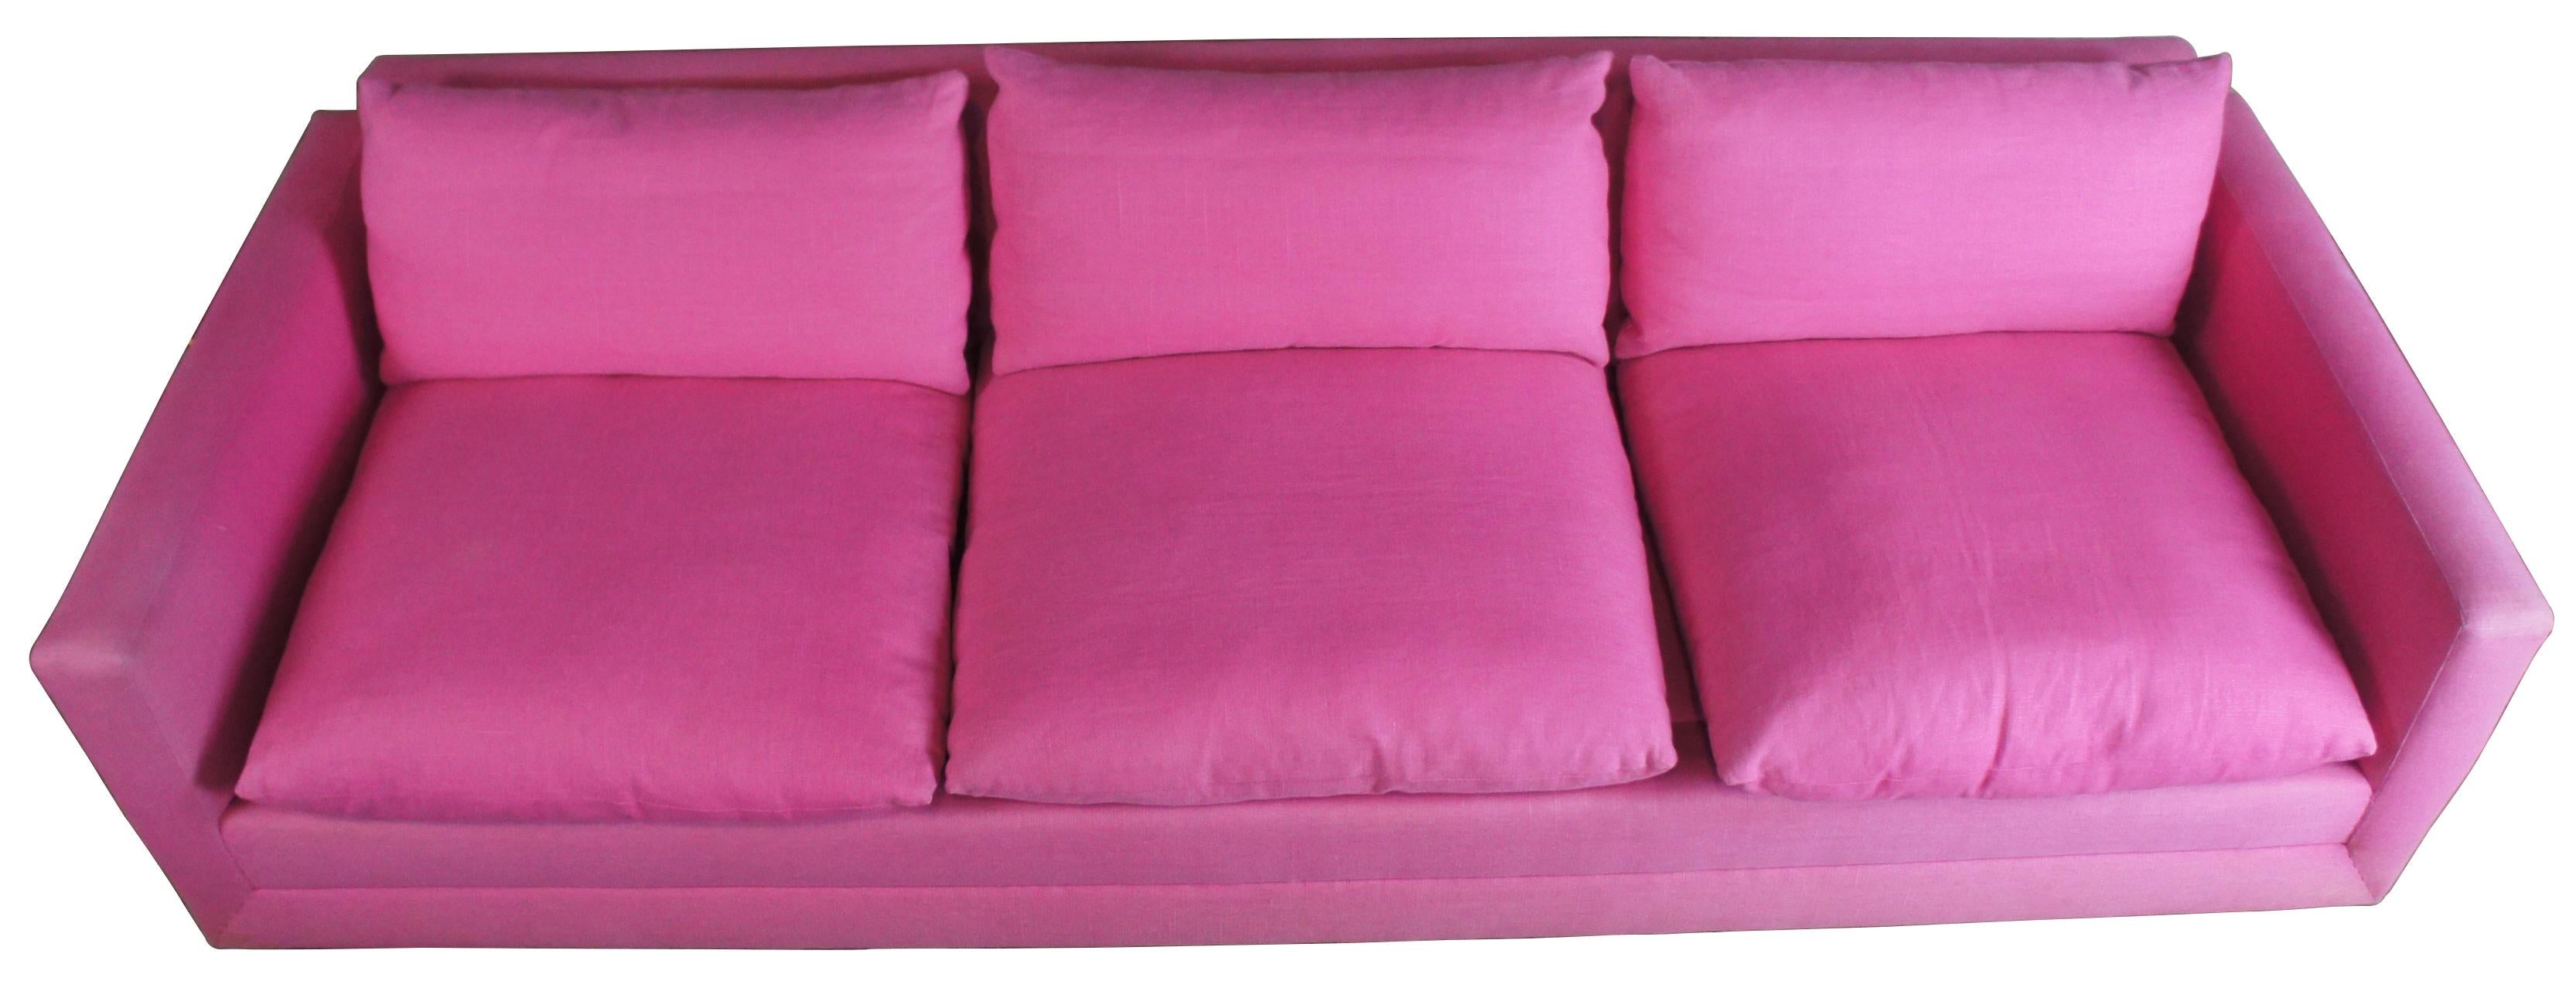 bright pink sofa